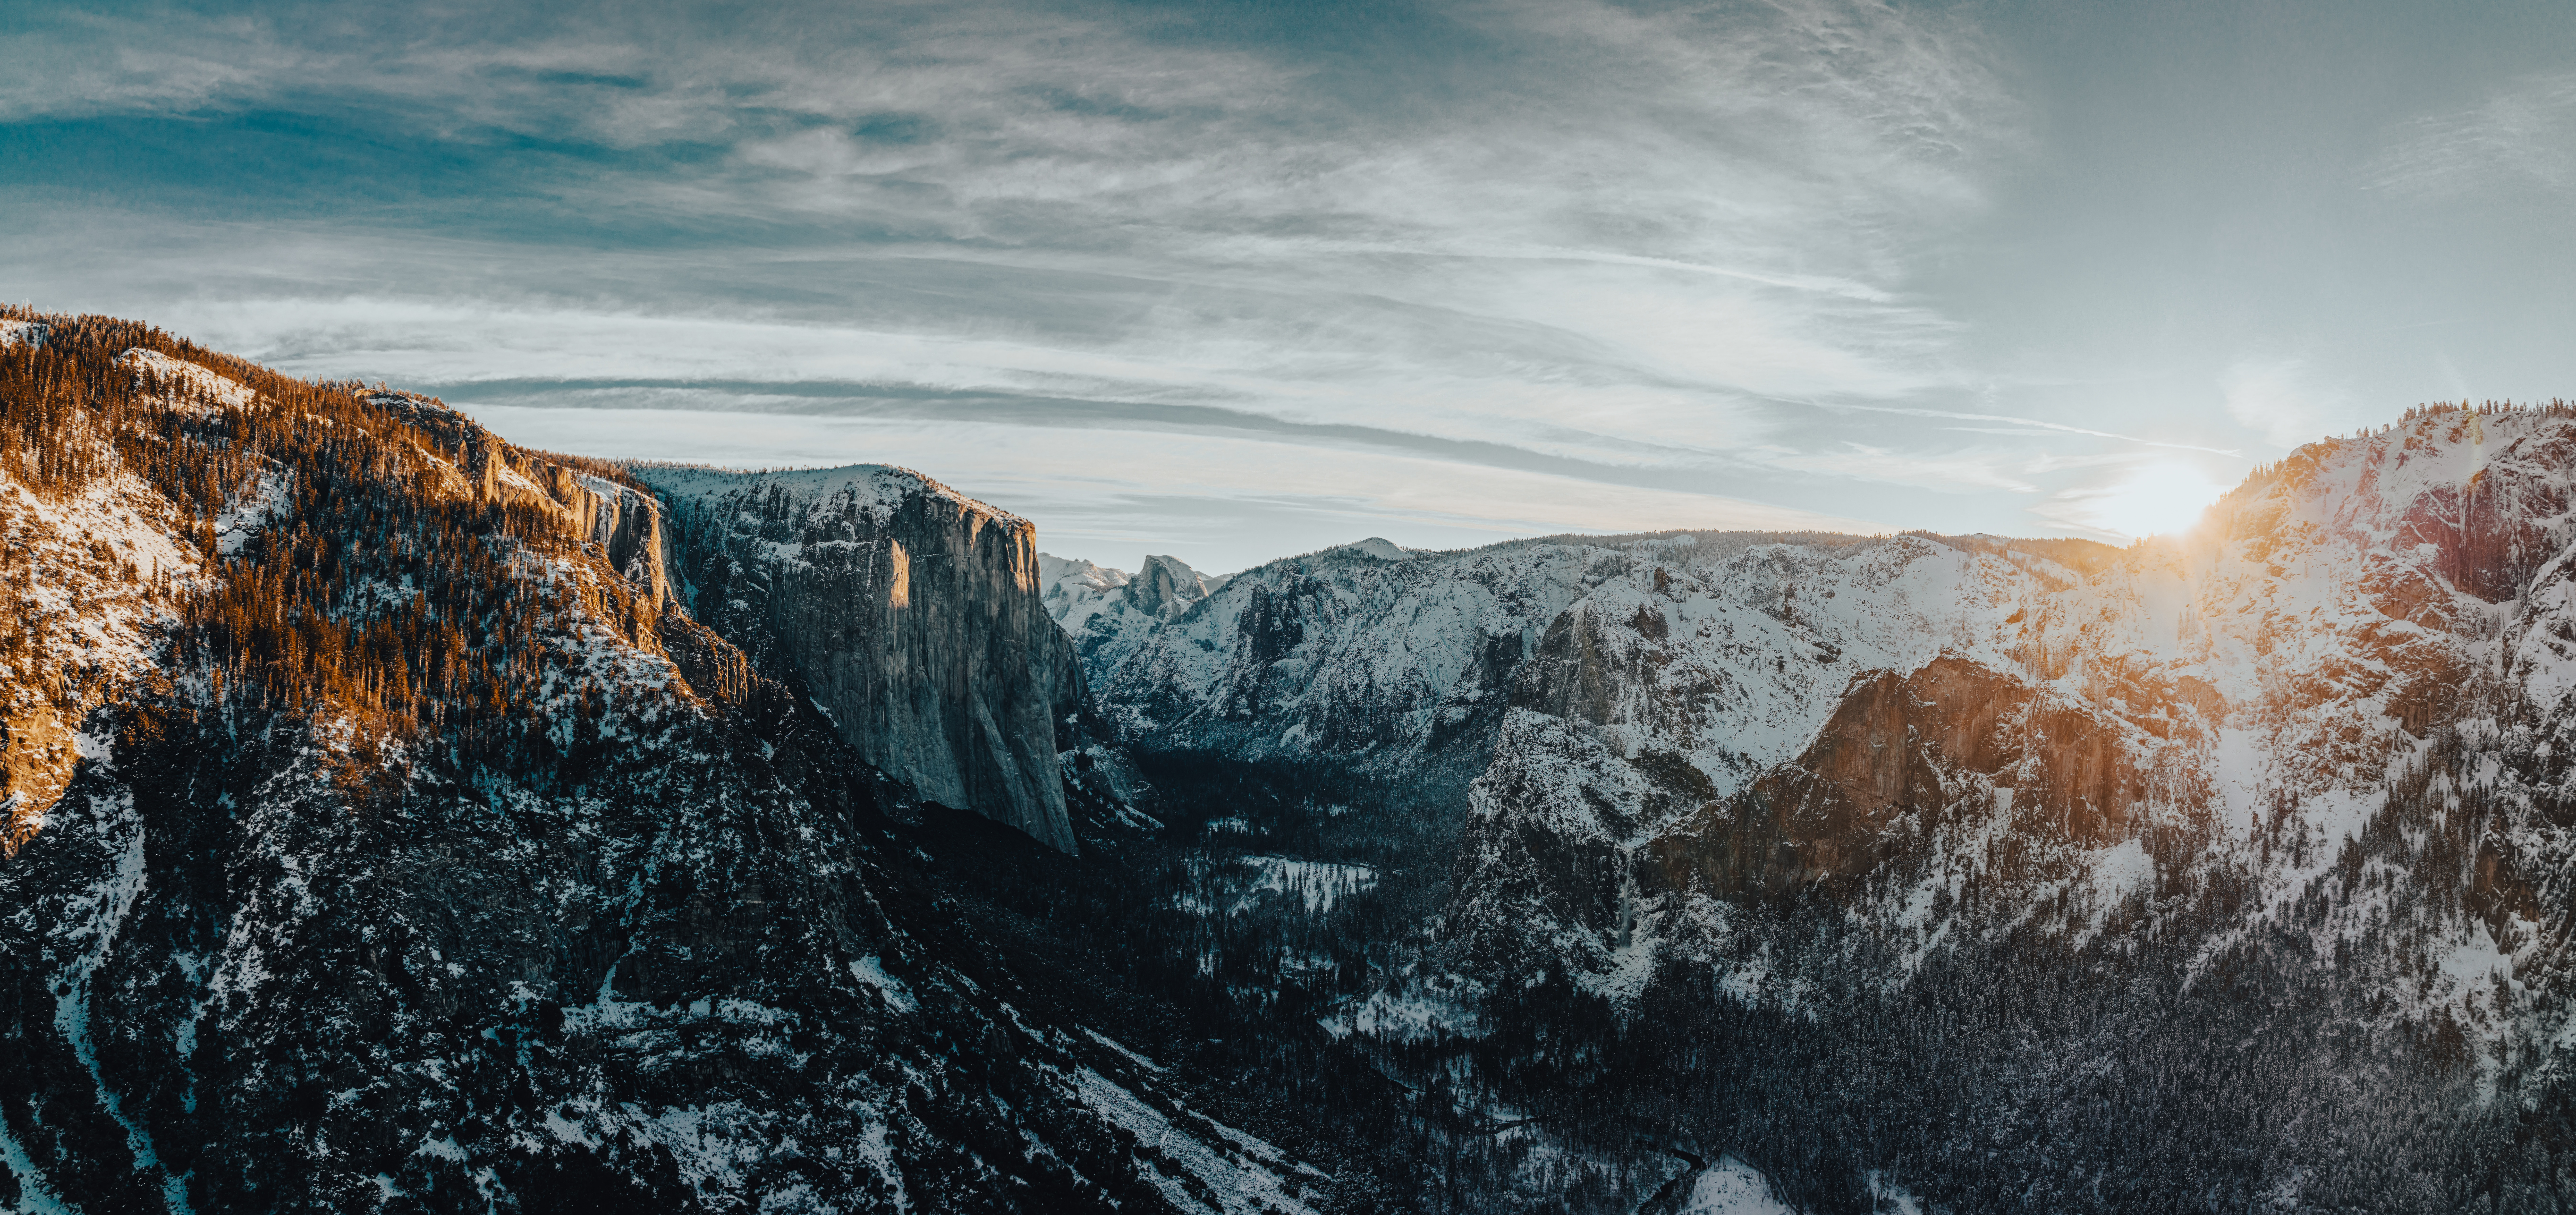 Yosemite National Park 8k Ultra HD Wallpaper by Cameron Venti